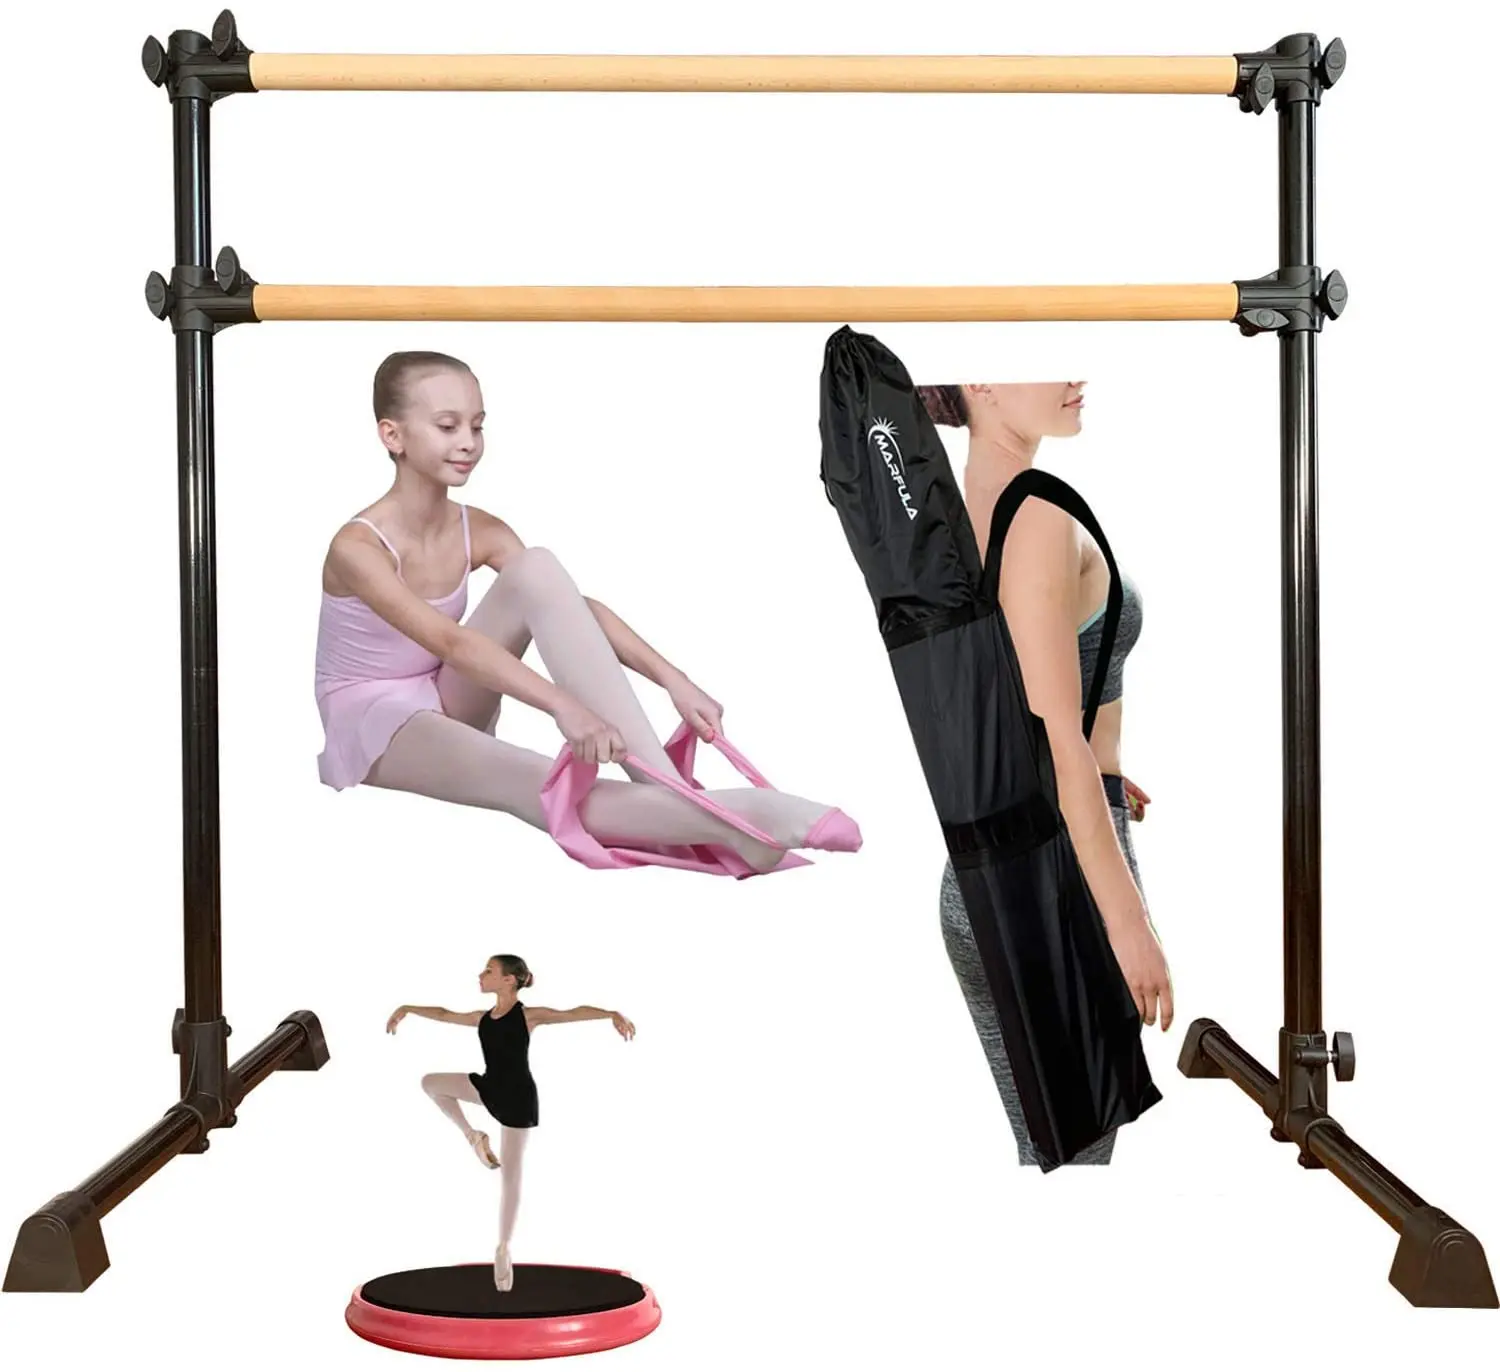 47 Portable Freestanding Ballet Barre for Home School Dancing